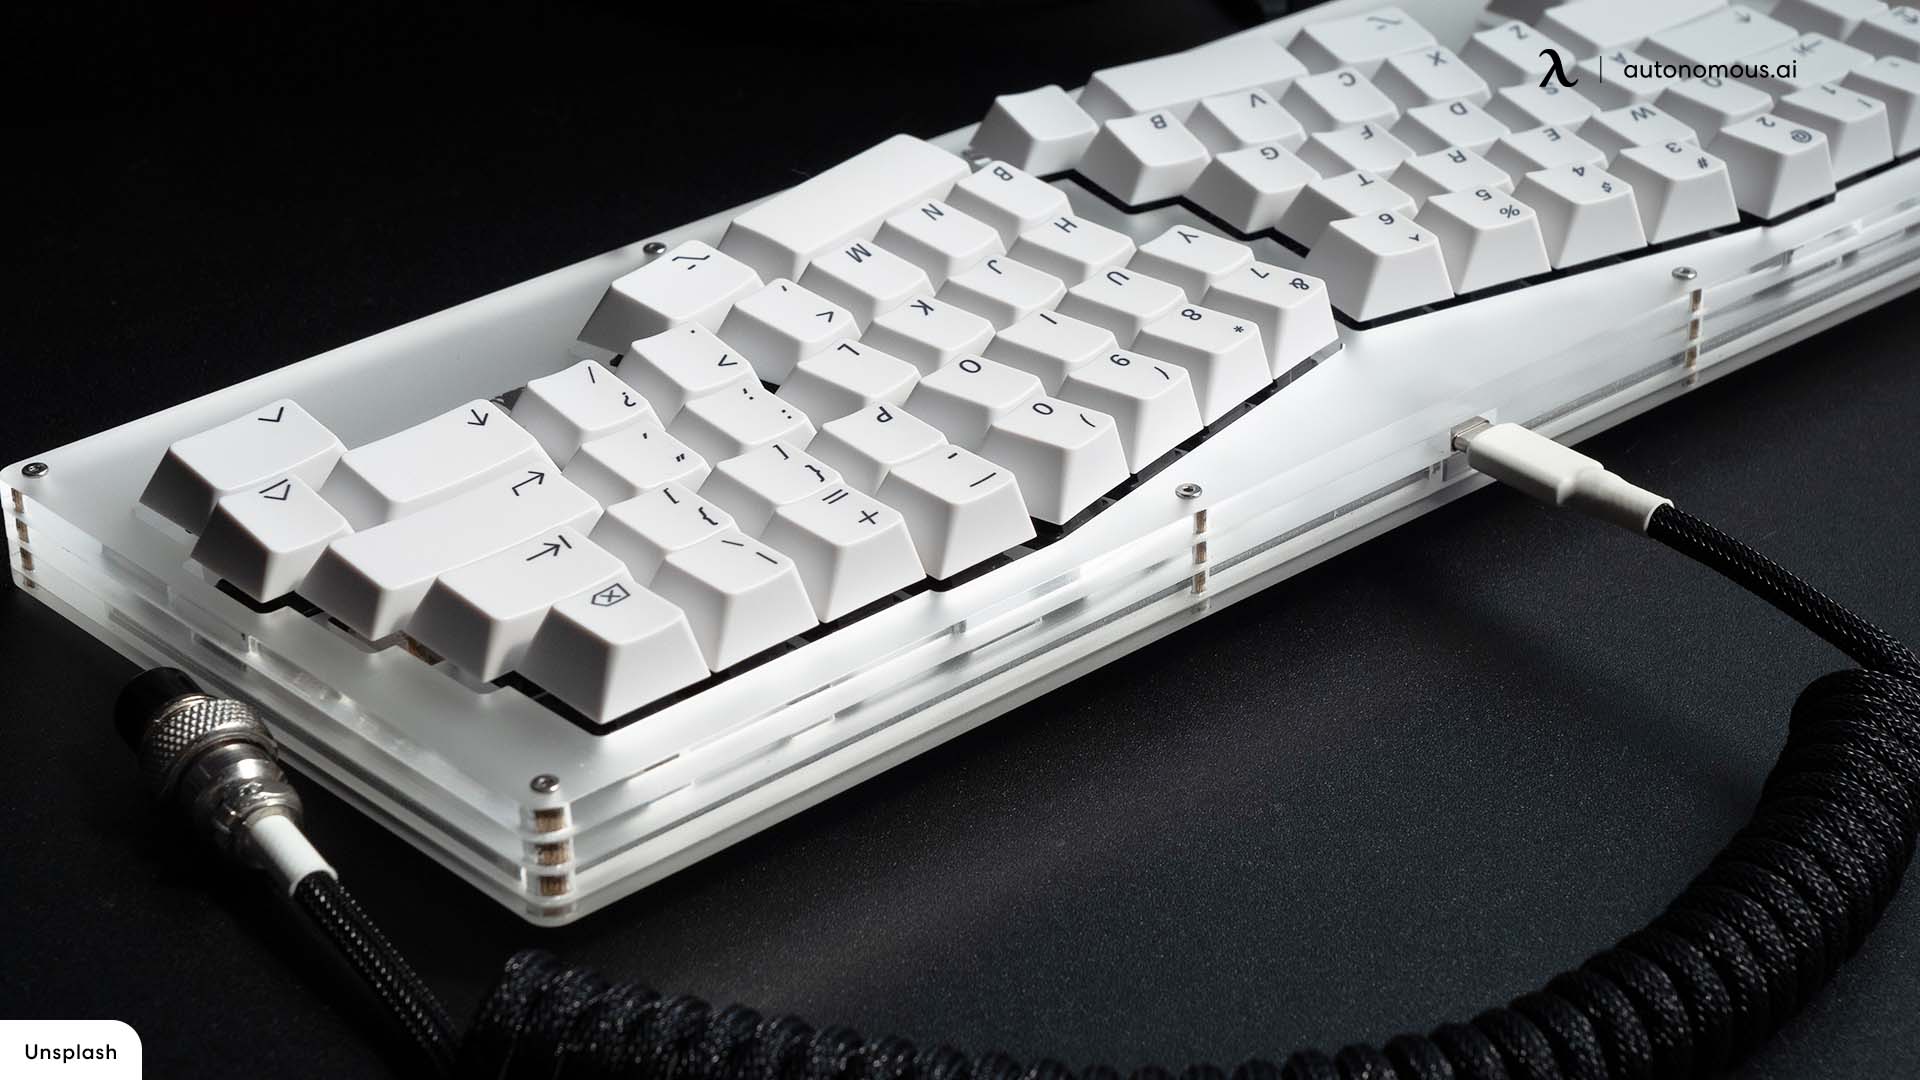 Ergonomic Keyboard modern office accessories